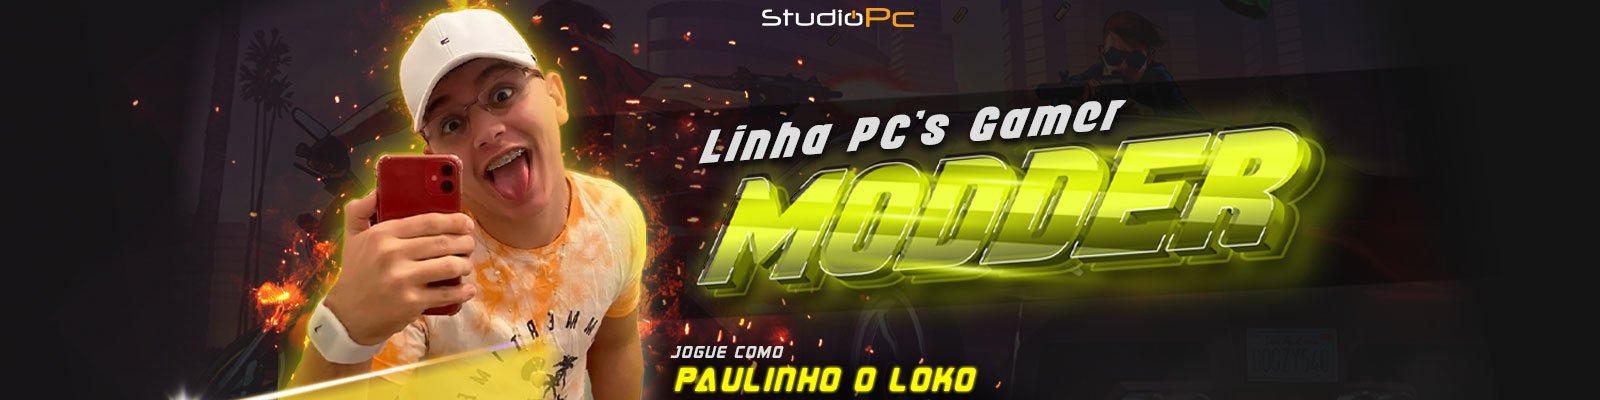 PC GAMER DO POLEX AQUI NA STUDIOPC 🚀 @CanalDoPolex #studiopc #pcs